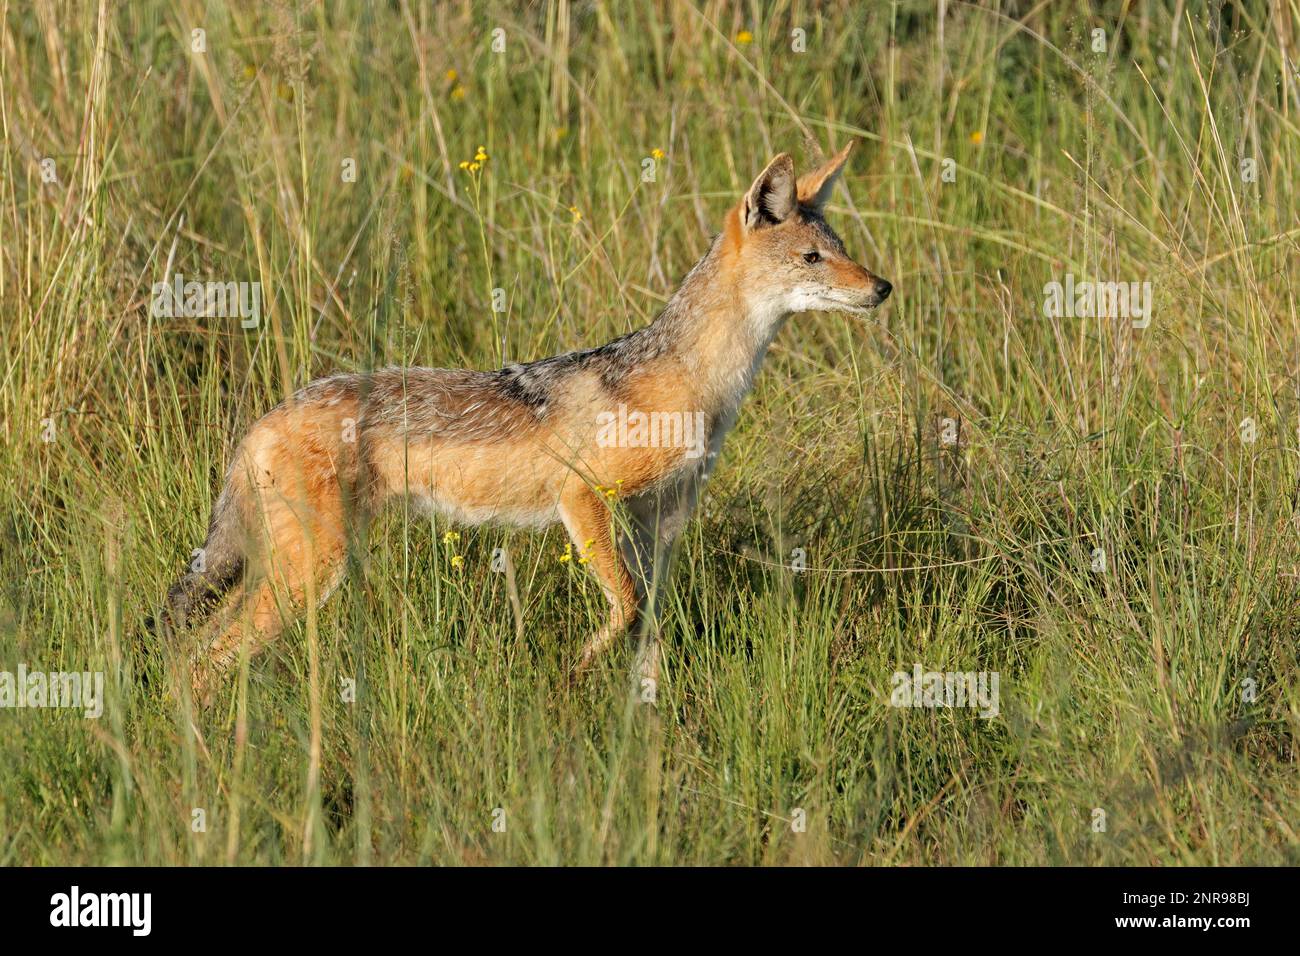 Alert black-backed jackal (Canis mesomelas) standing in grassland, South Africa Stock Photo